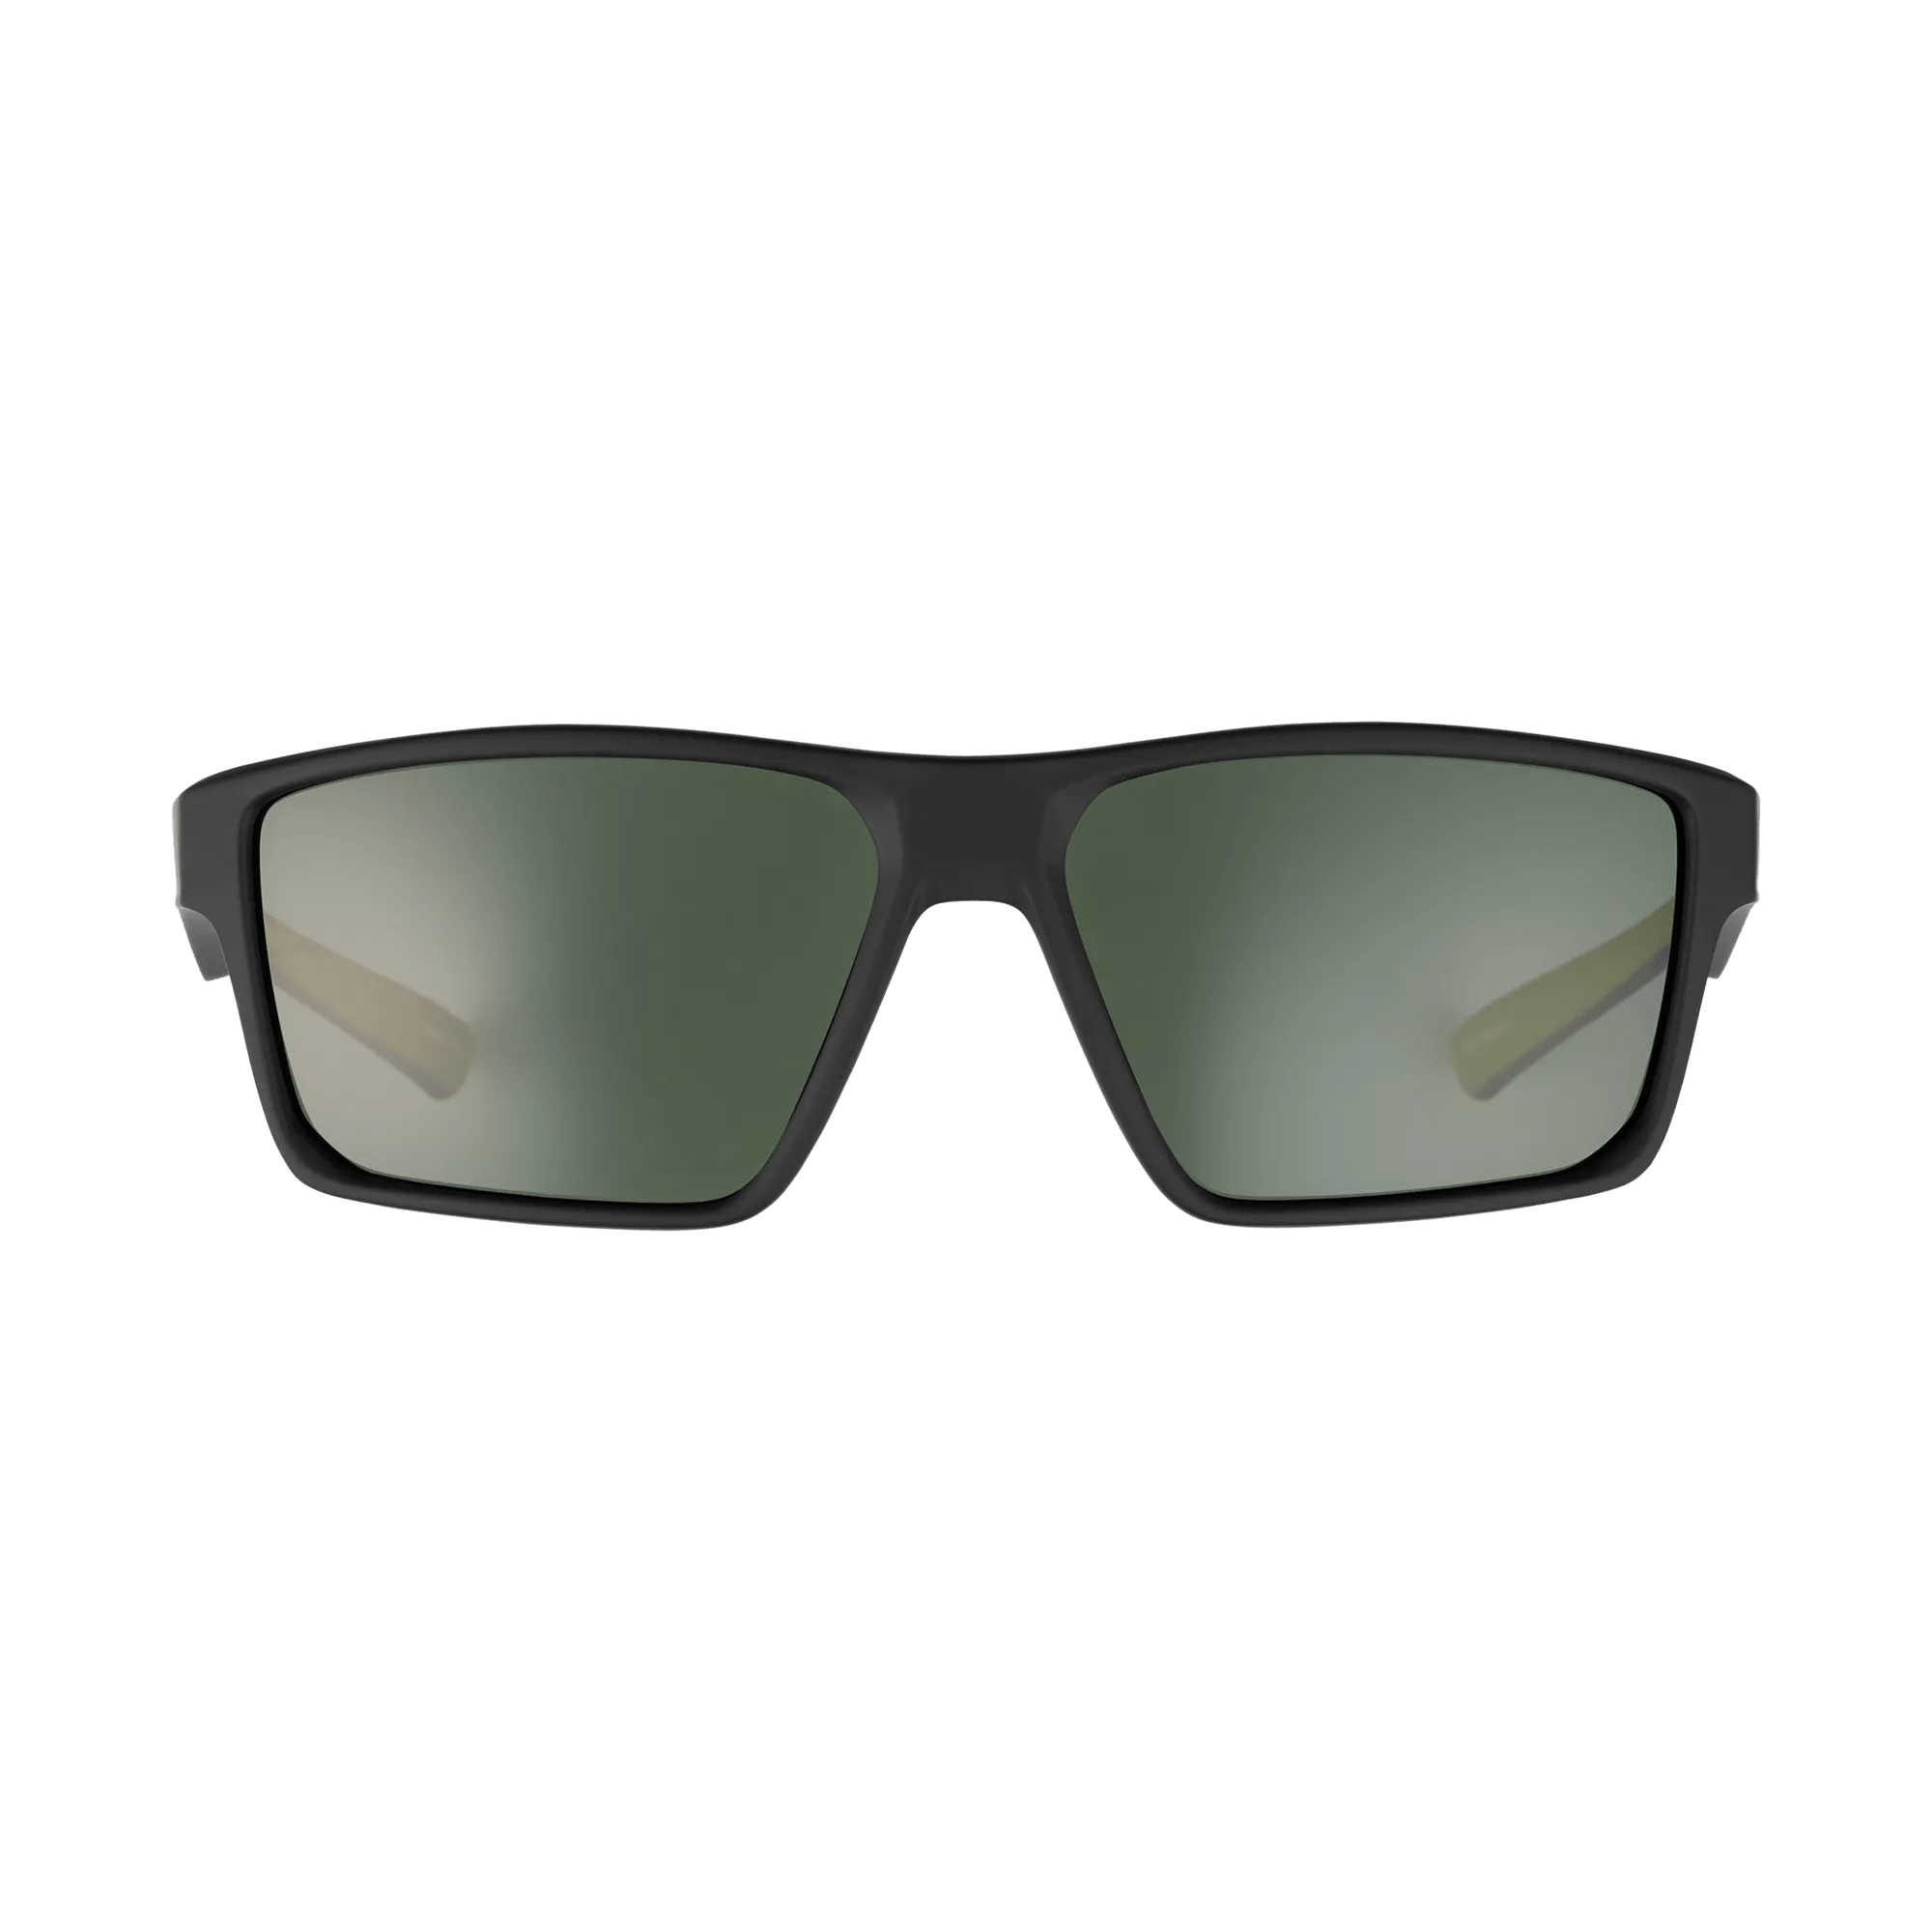 Bainbridge Polarized Sunglasses